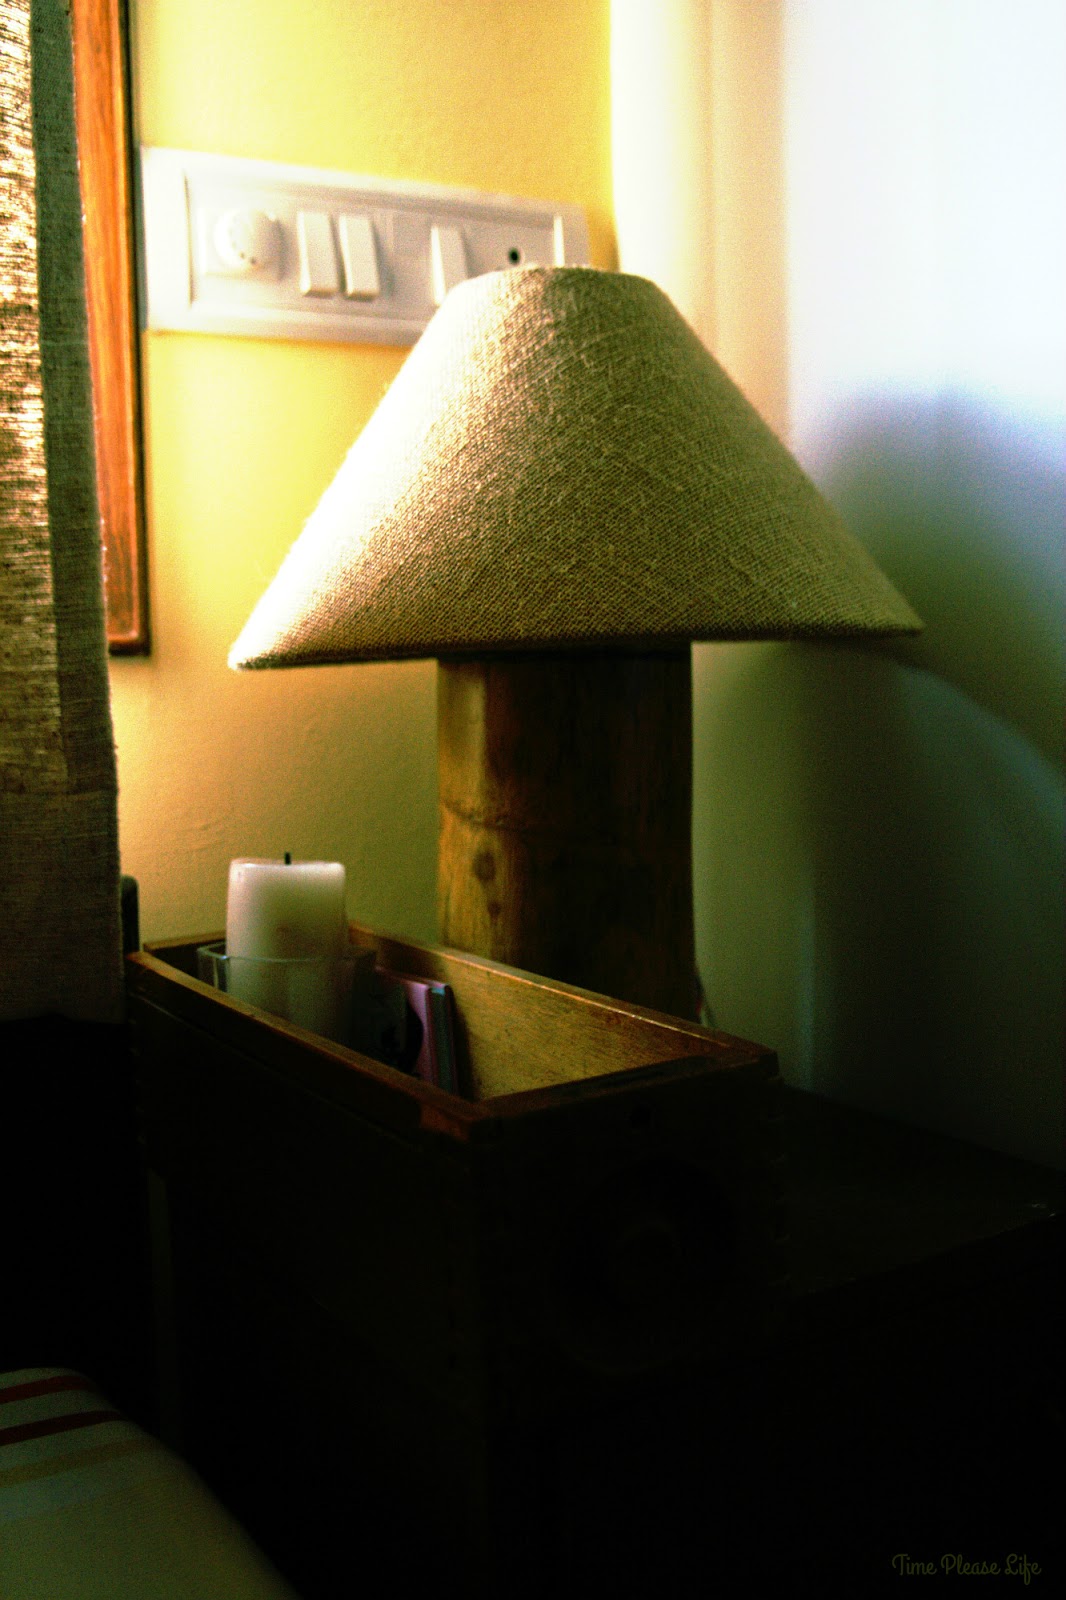 Time Please Life!!: DIY Bedside Lamp